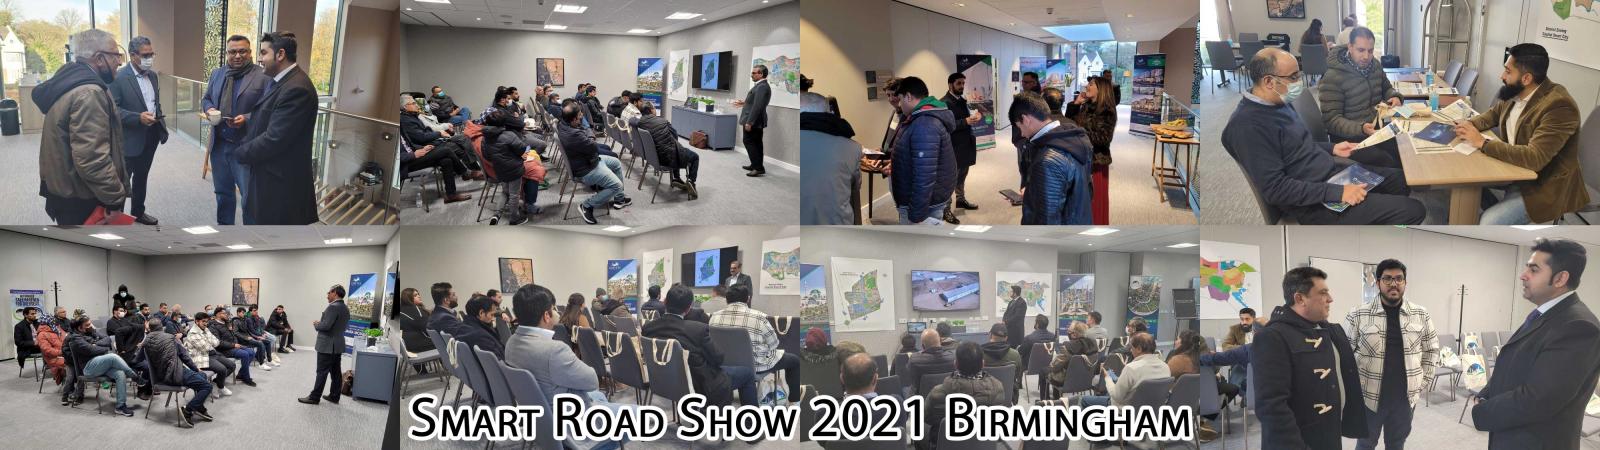 Smart Road Show 2021 Birmingham